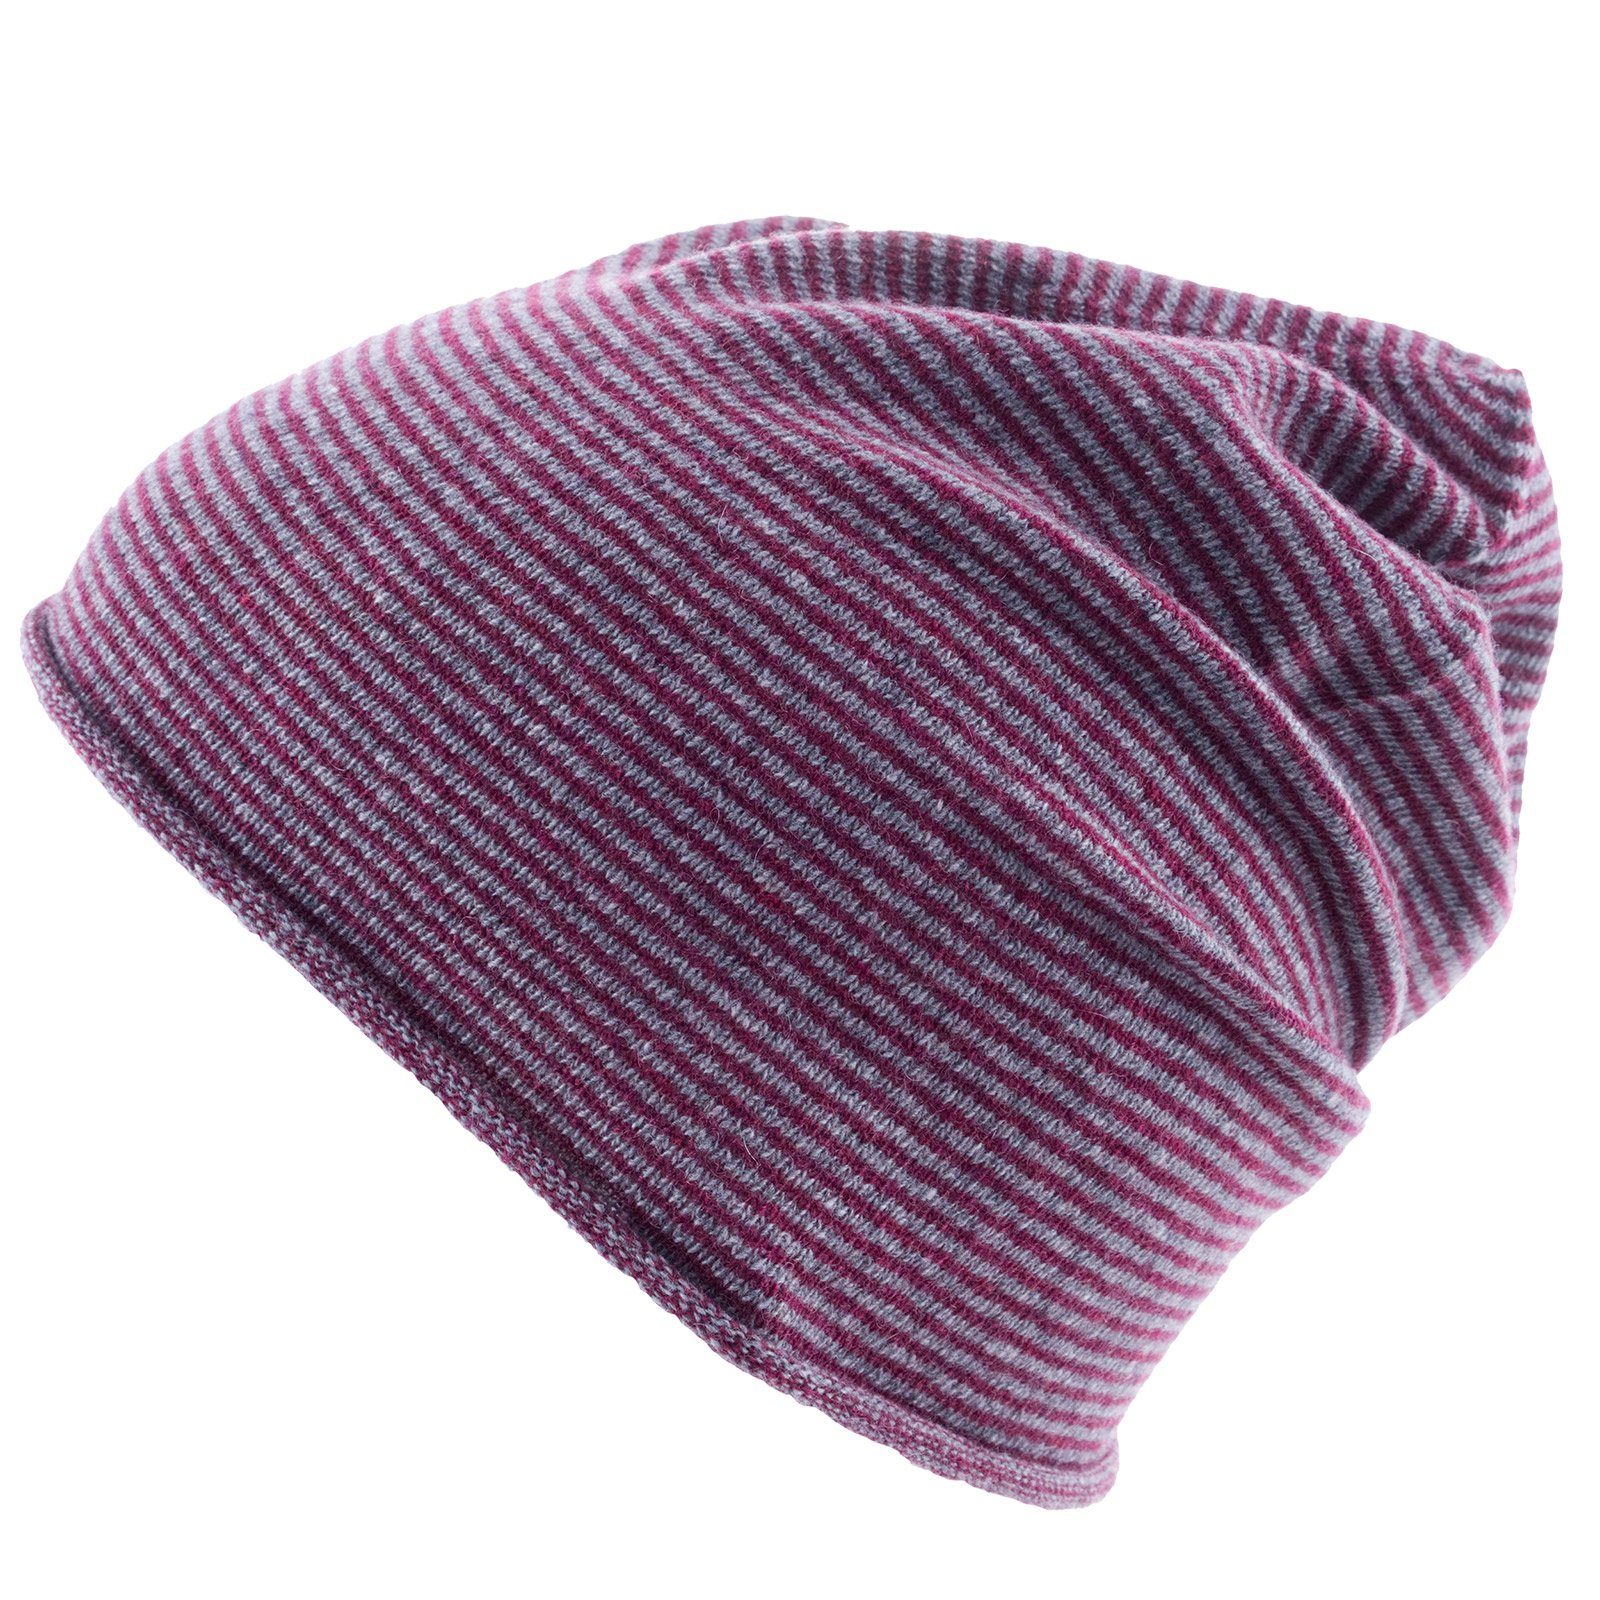 Cashmere Unisex Curl Strickmütze Mütze violett/grau 100 Stripes Nice Beanie Beanie Kaschmir % Really